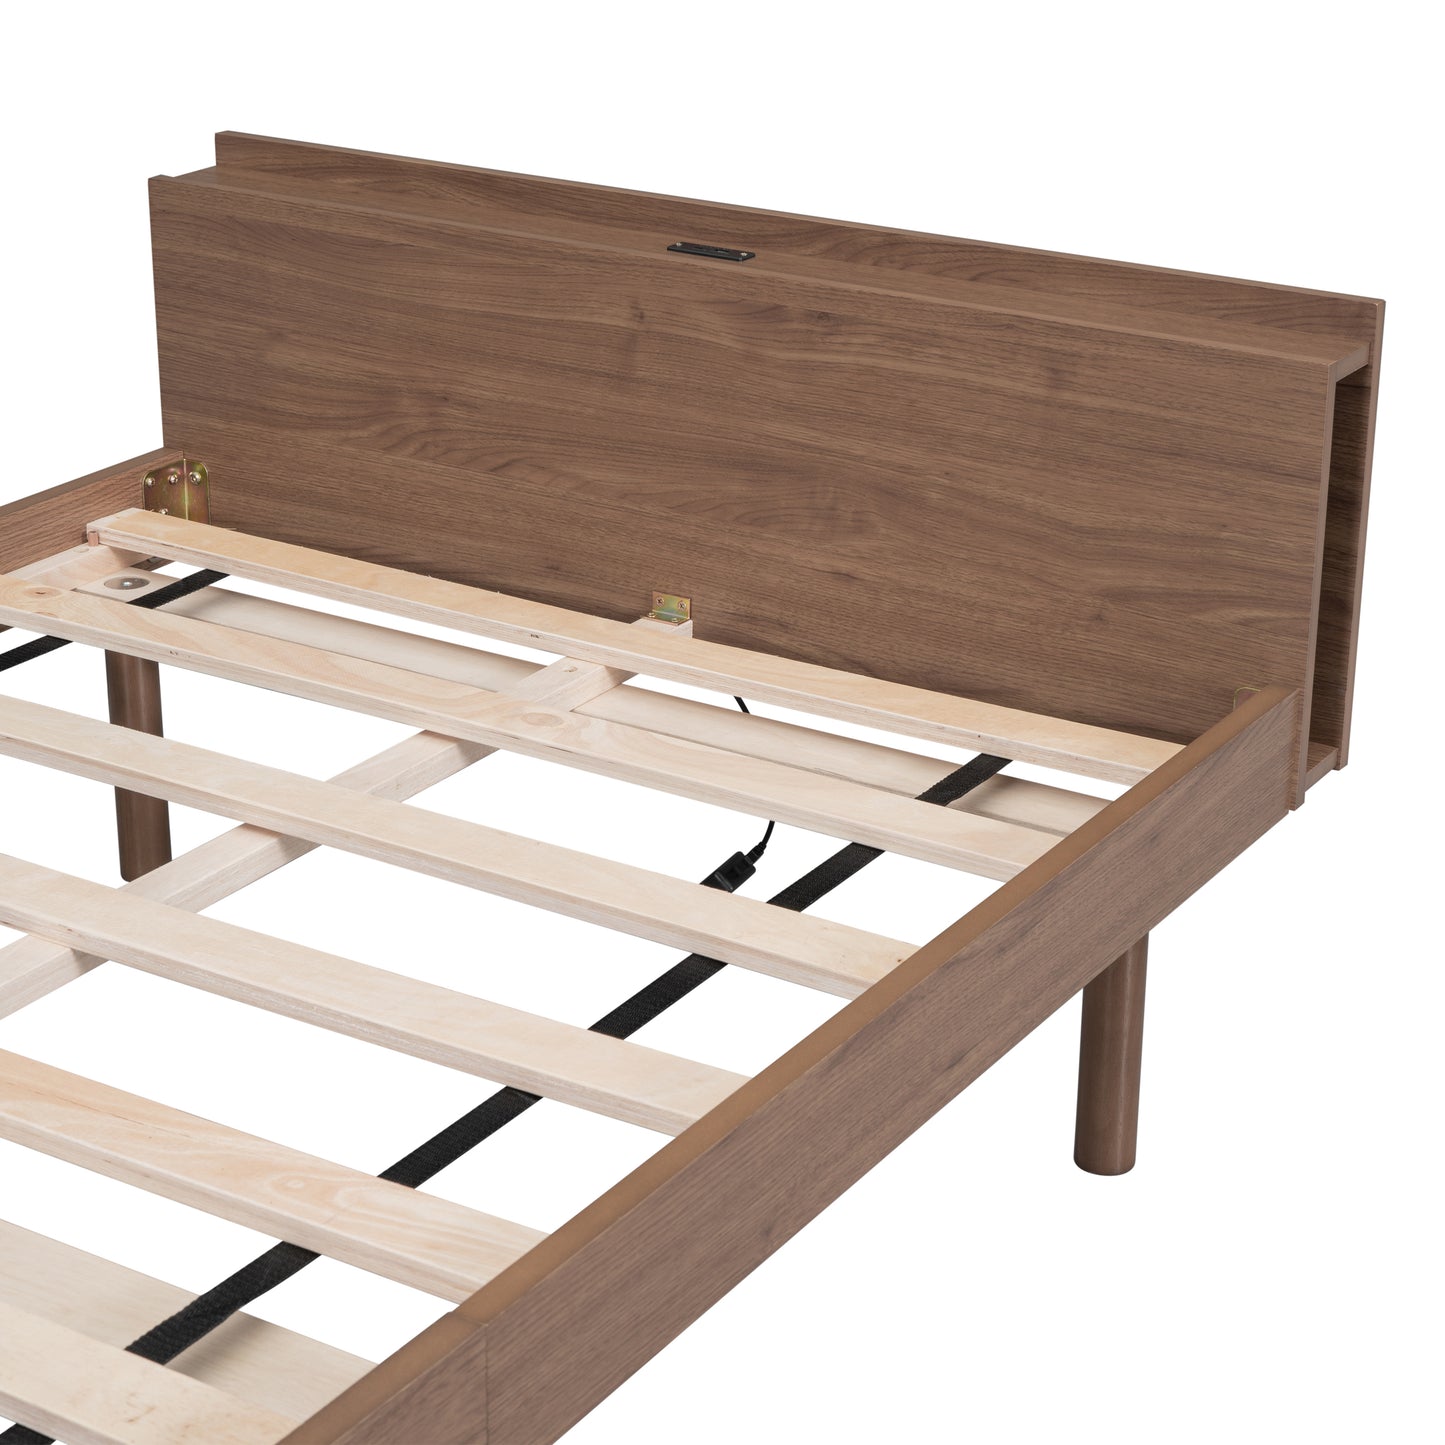 Modern Design Twin Size Platform Bed Frame with Headboard for Walnut Color